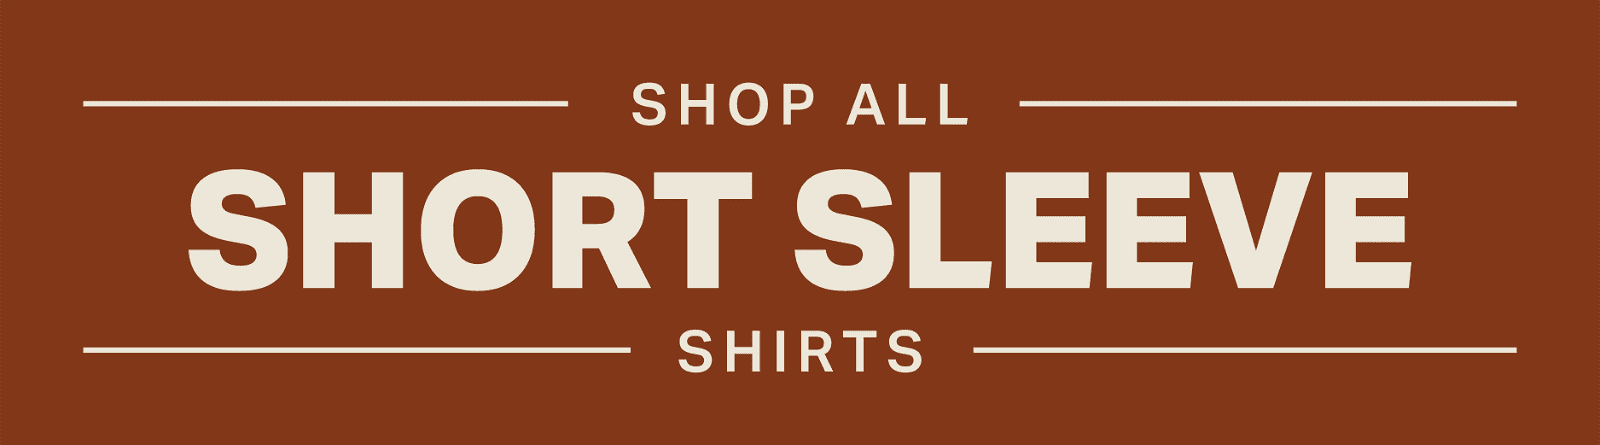 Shop All Short Sleeve Shirts